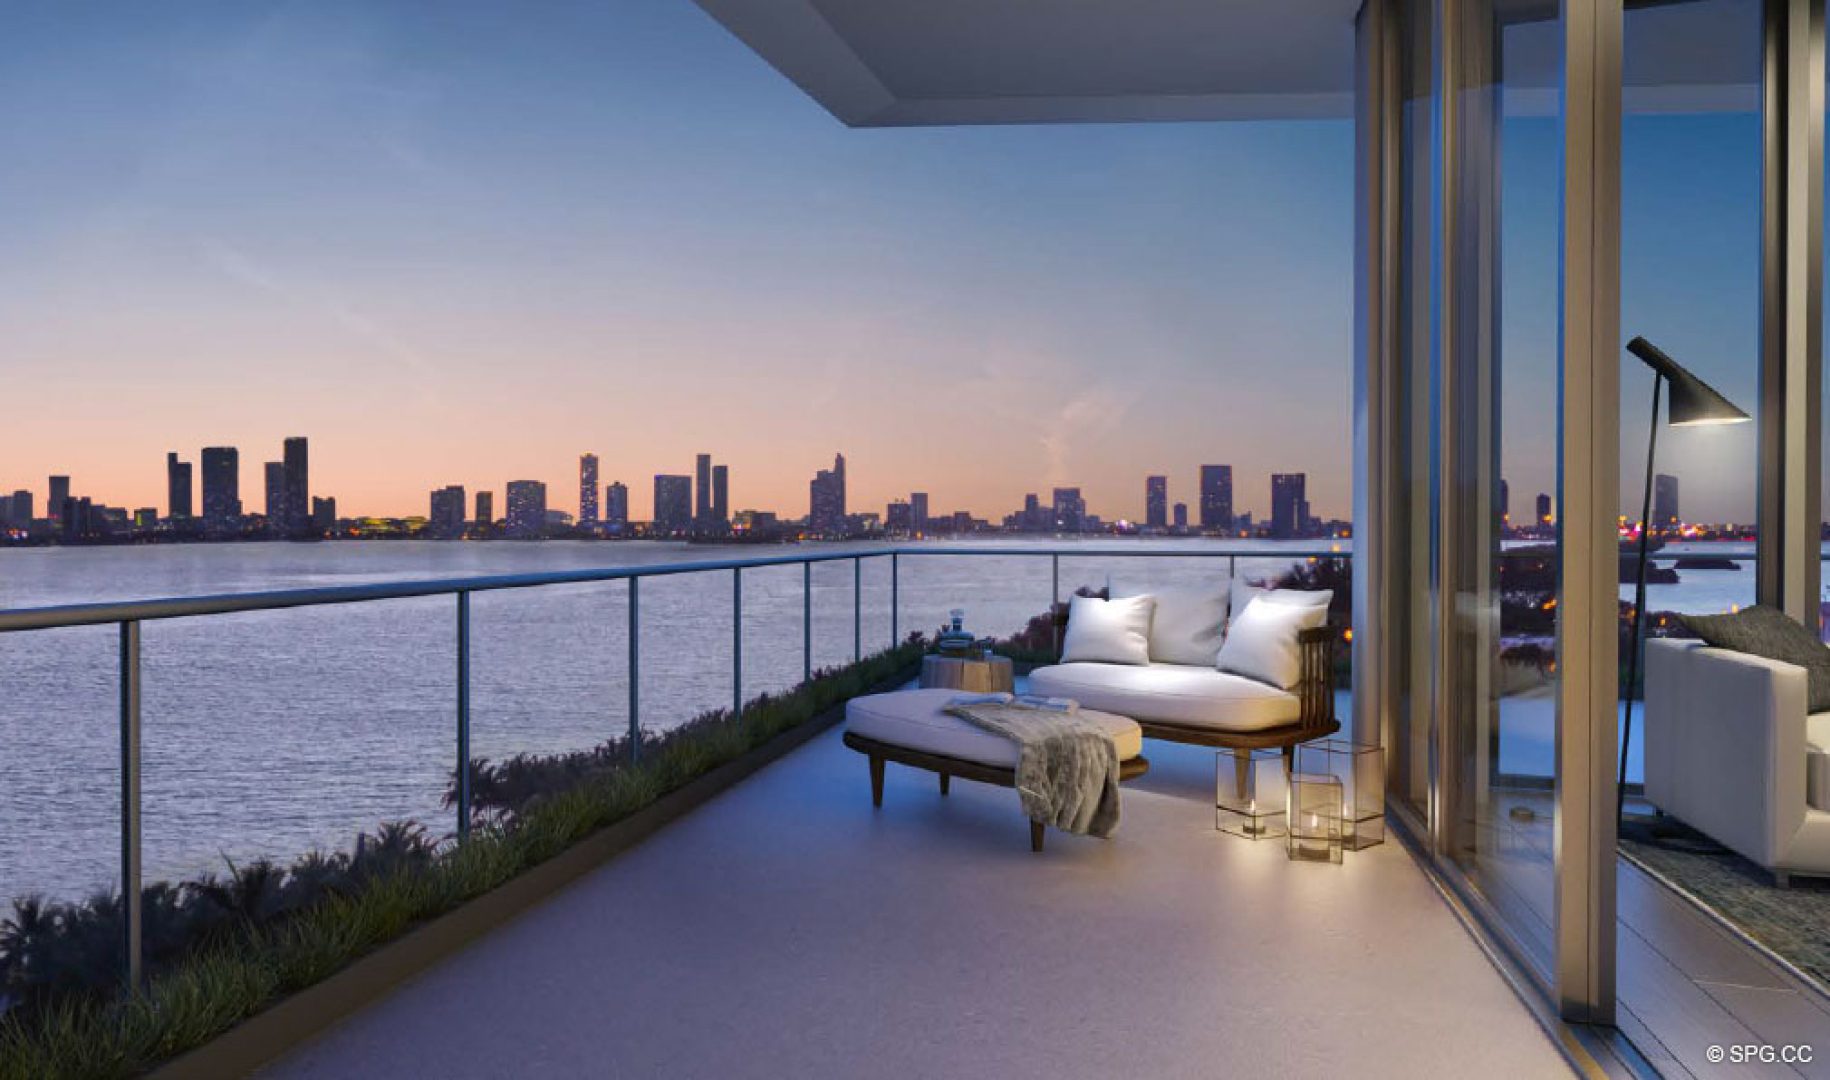 Spectacular Terrace Views from 3900 Alton, Luxury Waterfront Condos in Miami Beach, Florida 33140